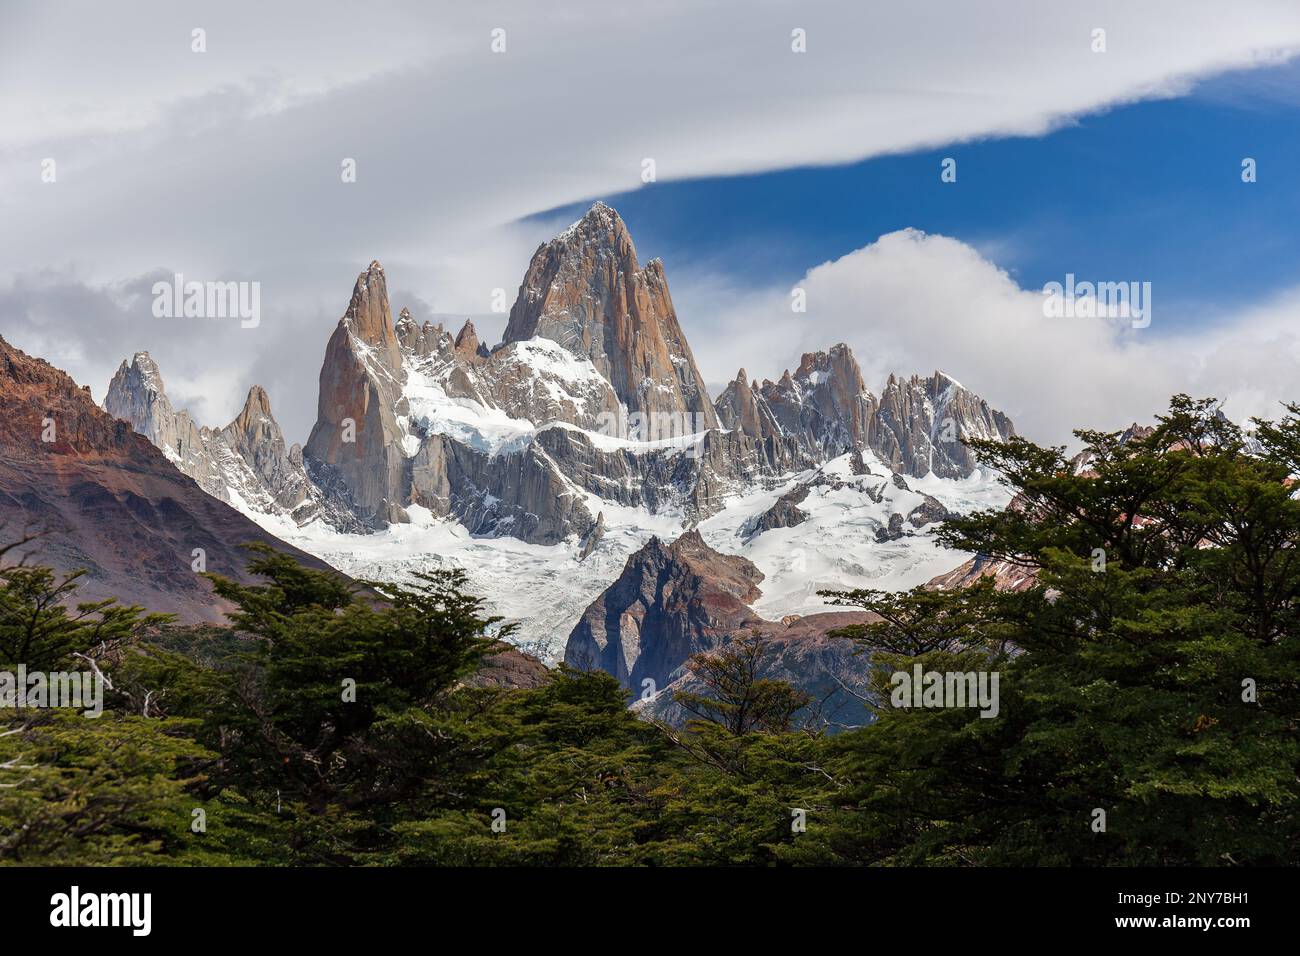 Mount Fitz Roy in Los Glaciares National Park, Argentina Stock Photo